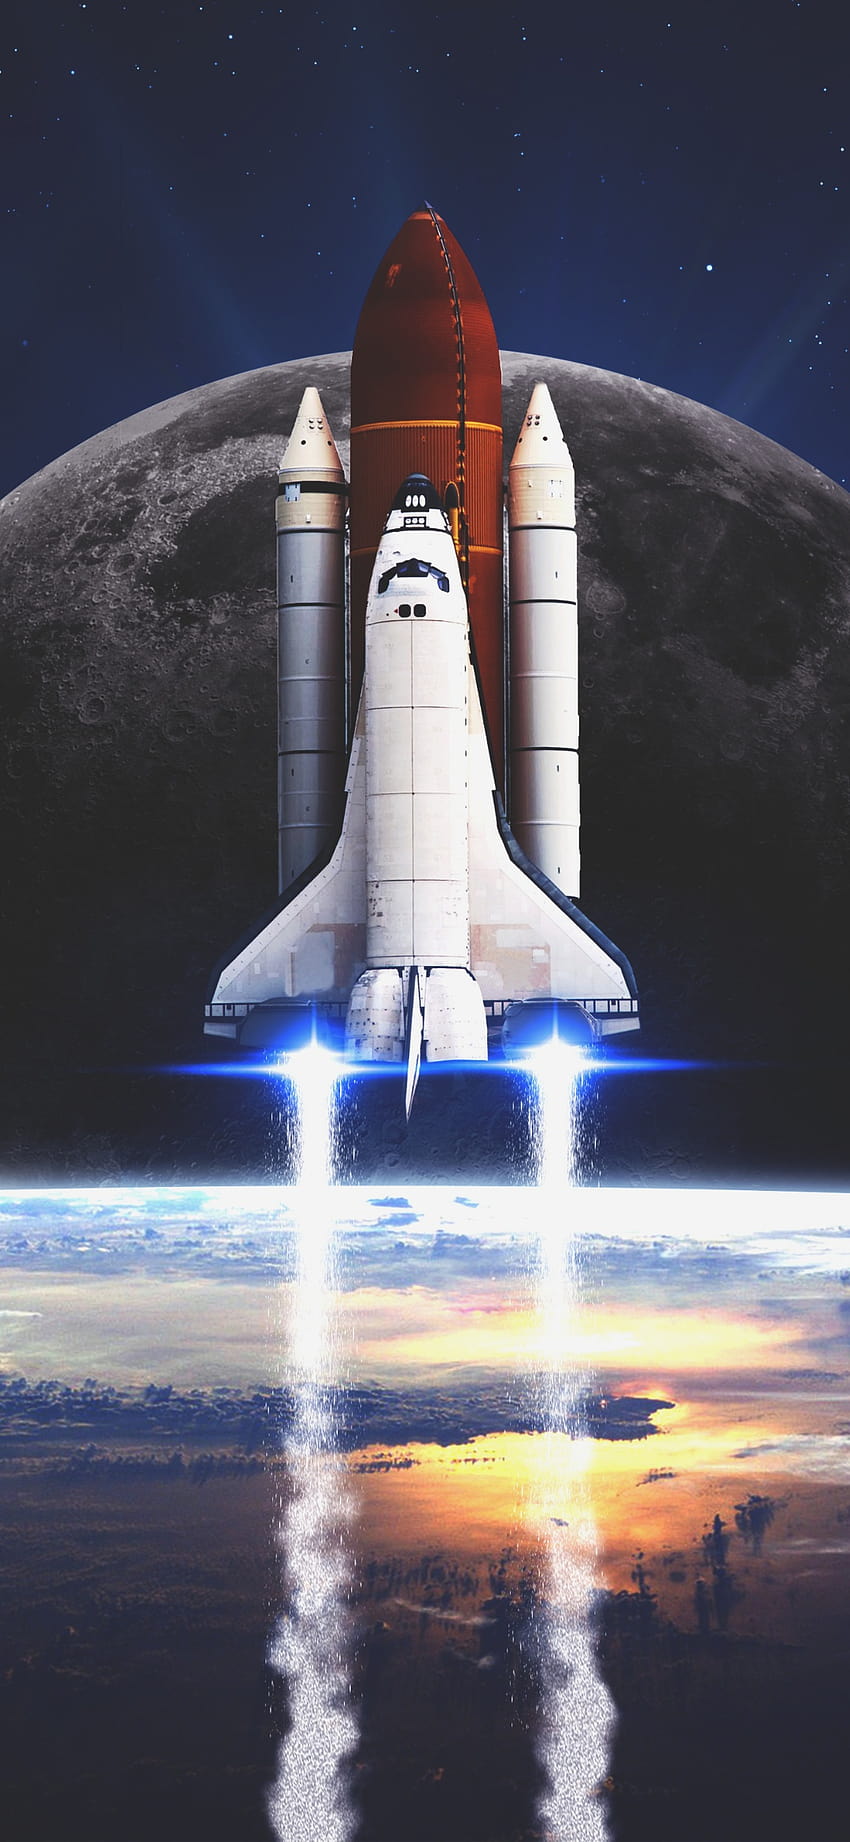 nasa rocket in space